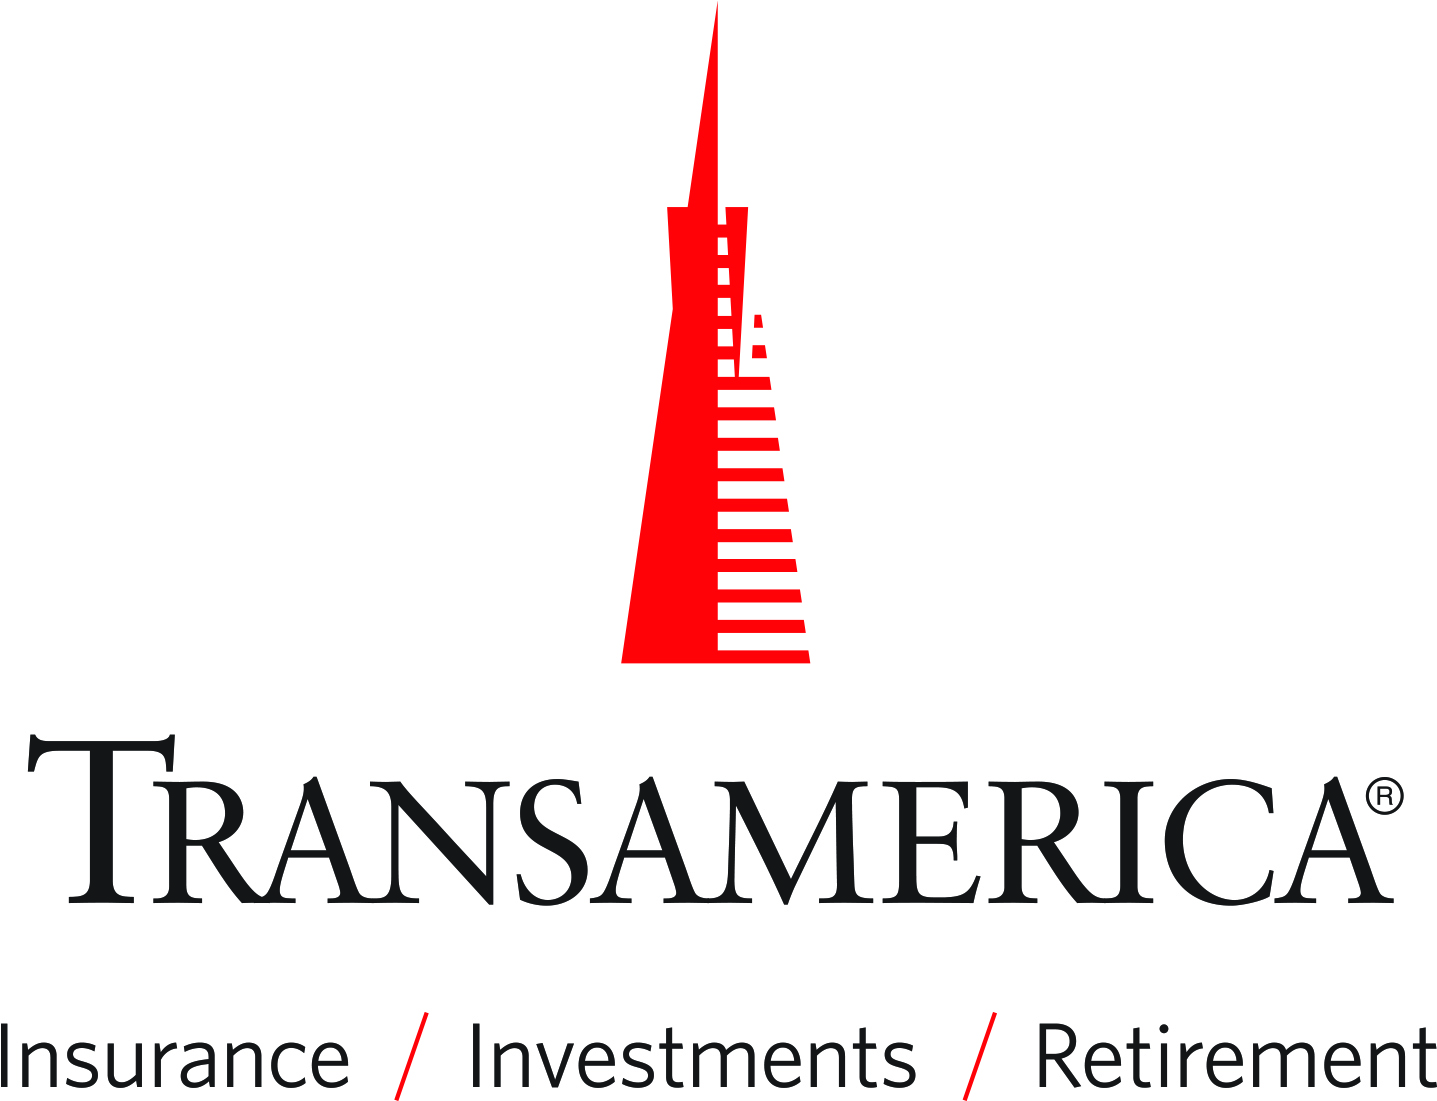 TransAmerica Insurance Investments Retirement